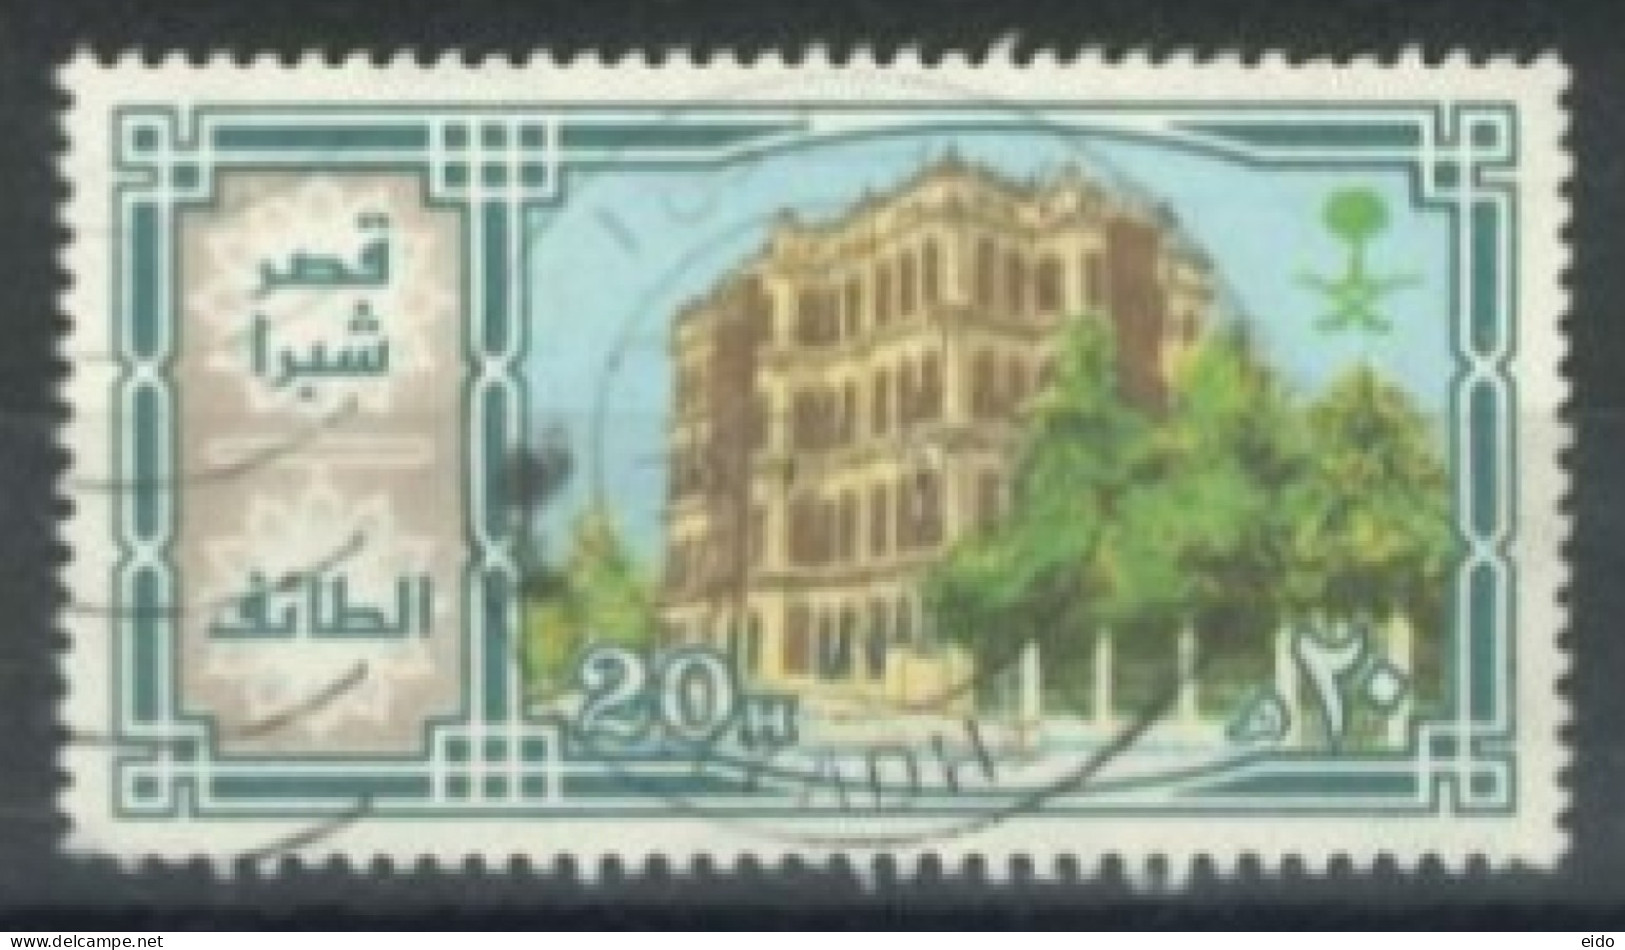 SAUDI ARABIA -1984, SHOBRA PALACE STAMP, SG # 1367, USED. - Arabie Saoudite